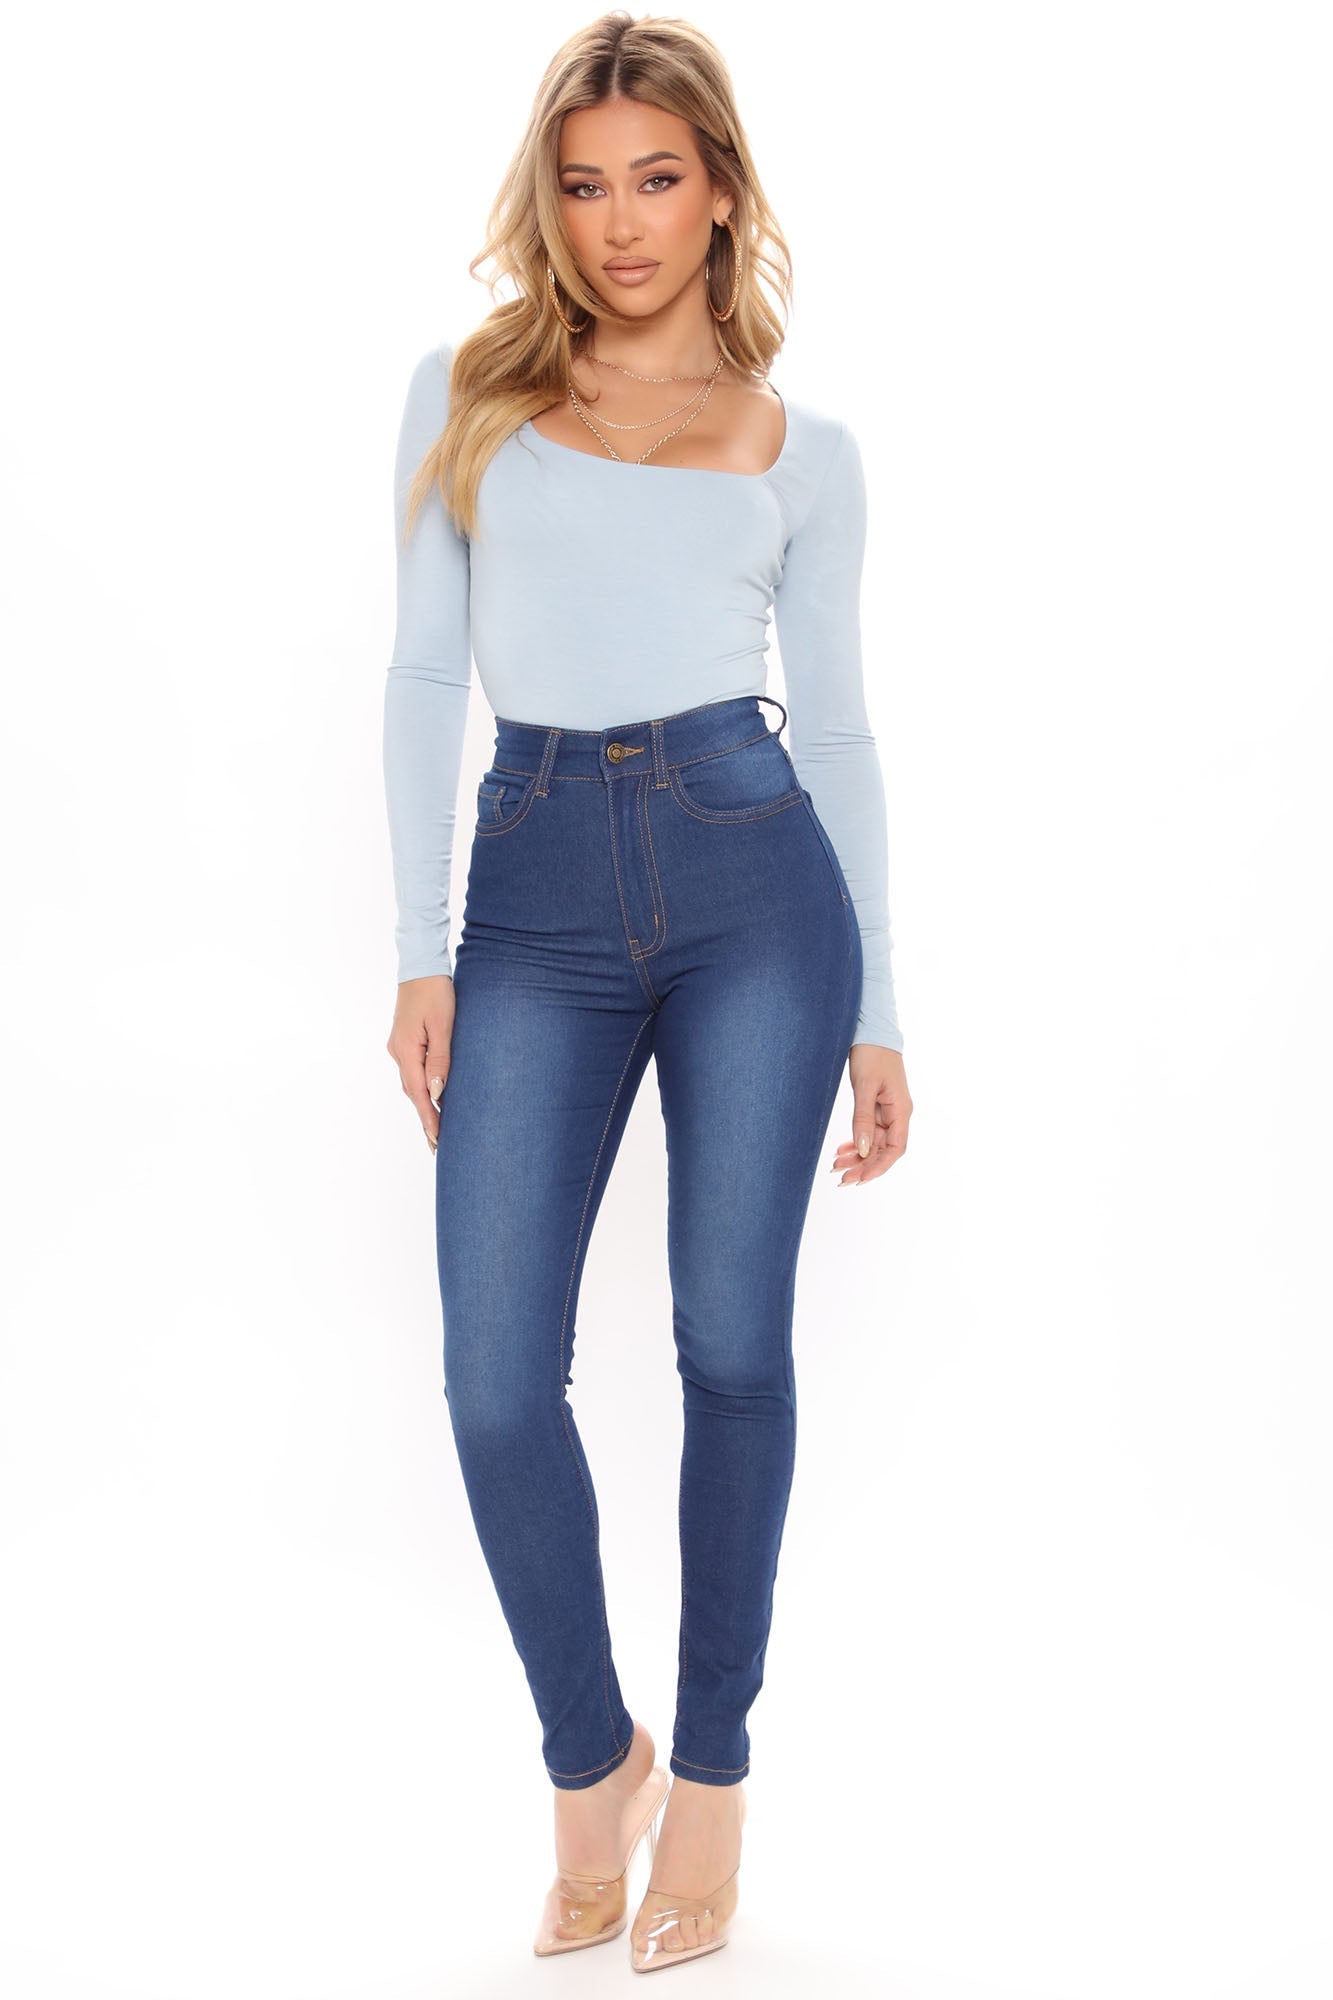 All The Booty Ripped Skinny Jeans - Medium Blue Wash, Fashion Nova, Jeans